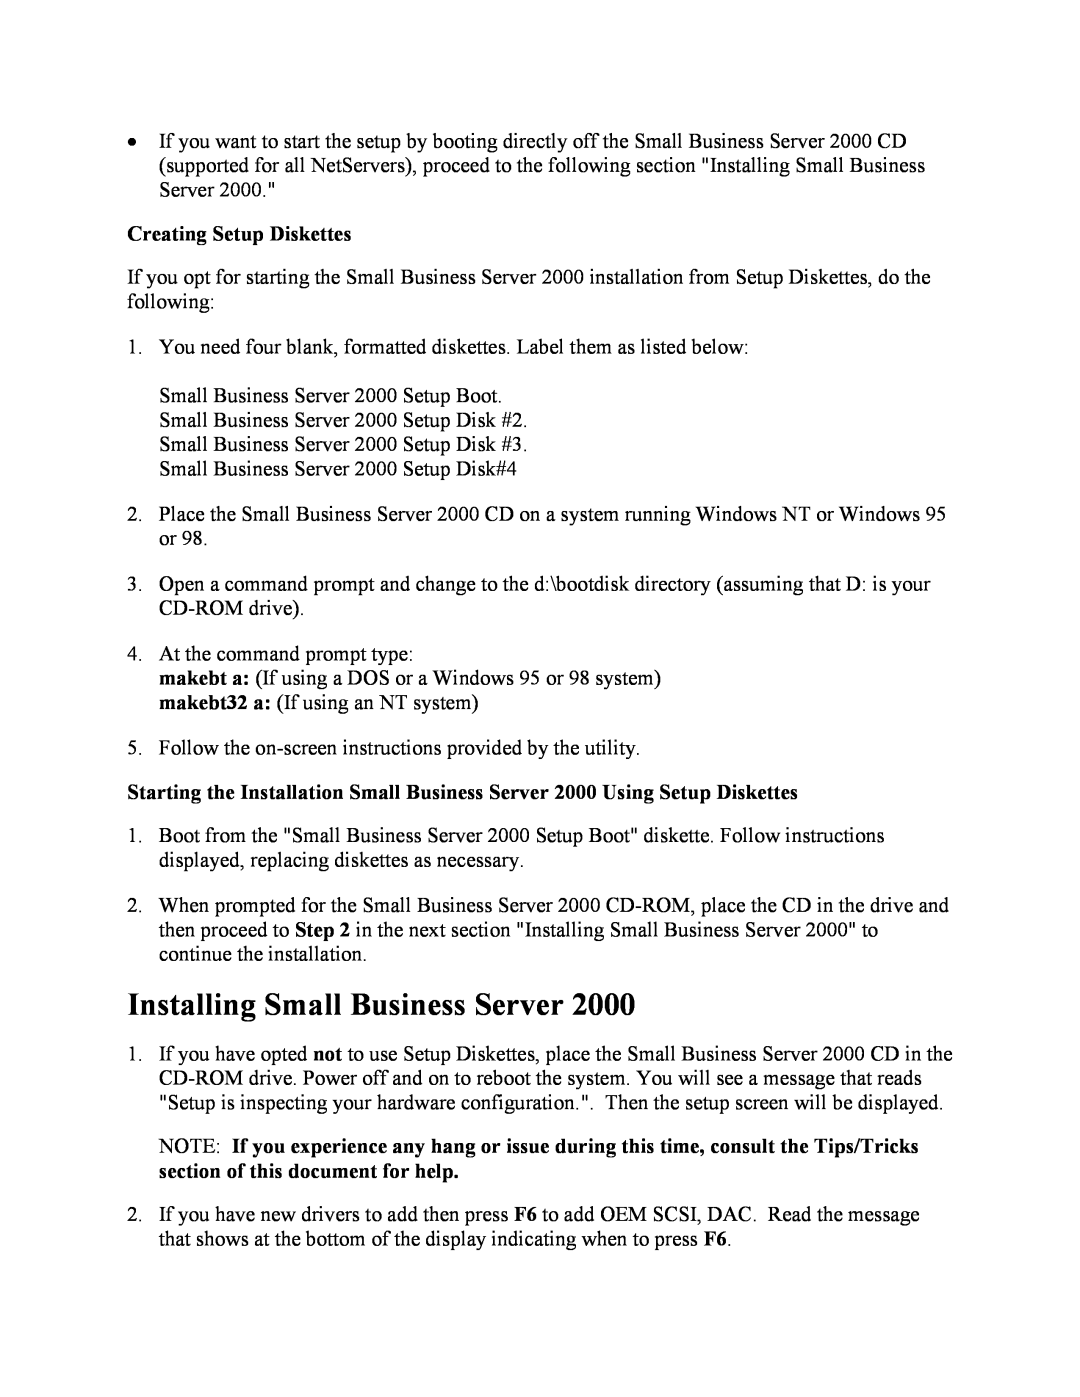 Microsoft LC2000, TC4100, E60, TC3100, E800 manual Installing Small Business Server 